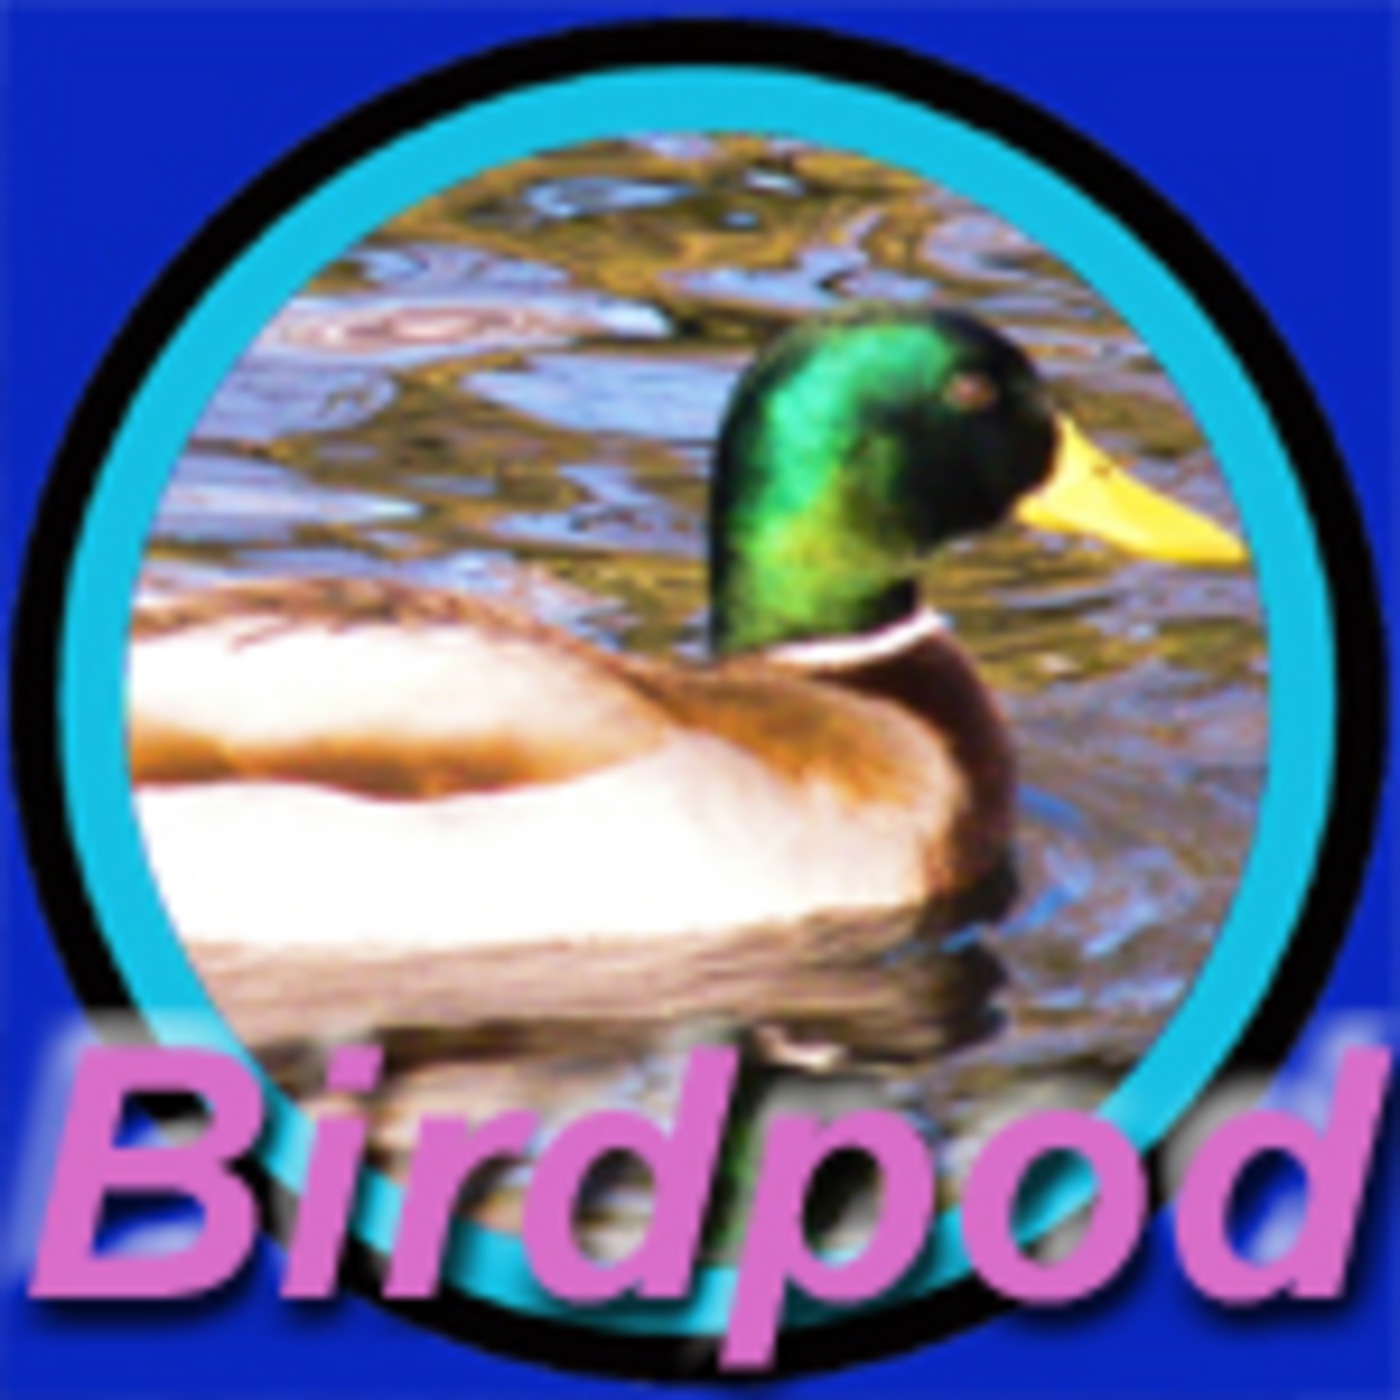 Birdpod Weekly 31st May, 2009 - 